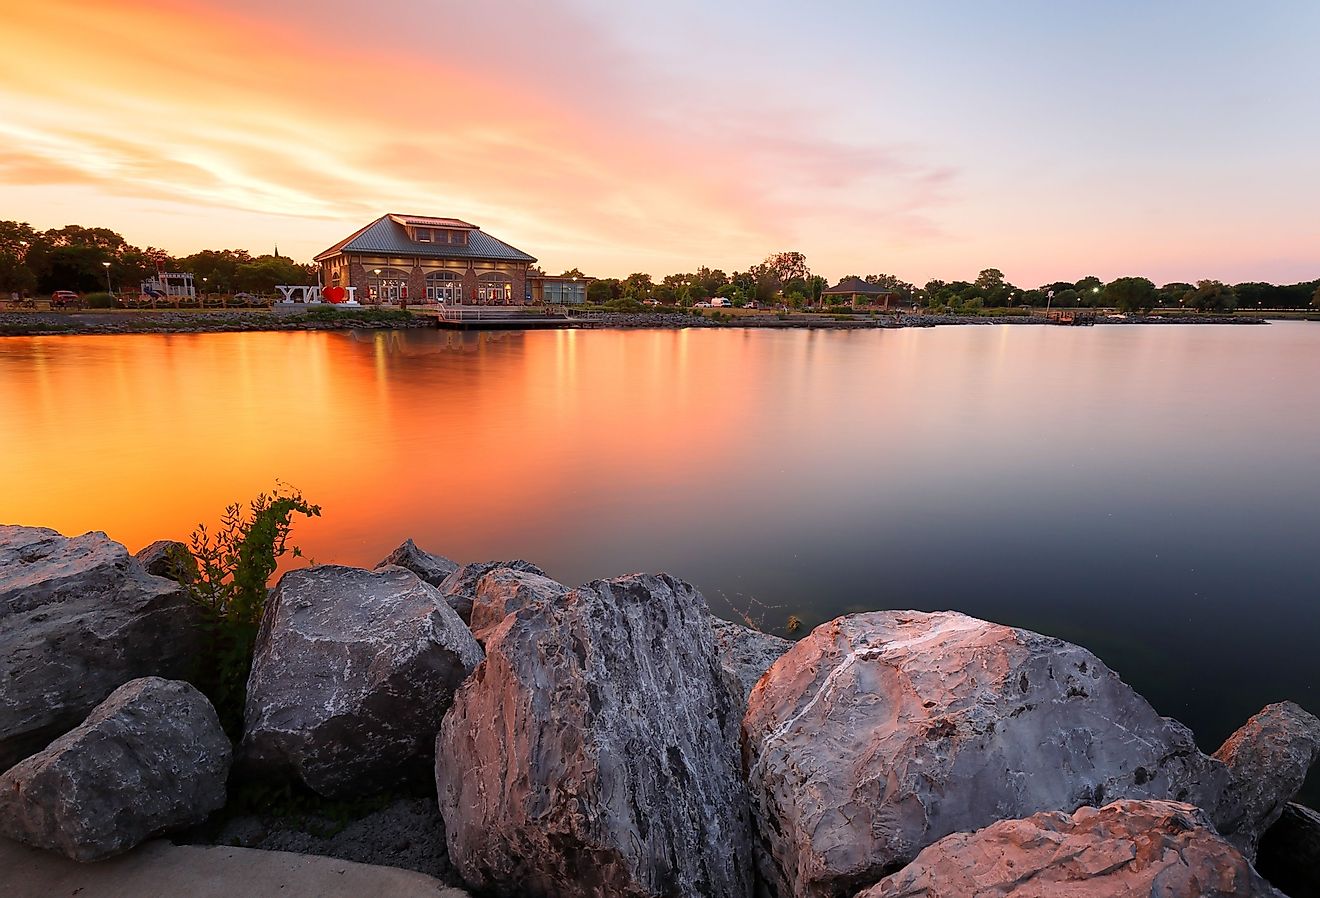  Beautiful sunset of Seneca Lake and Finger Lakes Welcome Center in Geneva, NY. Image credit Jay Yuan via Shutterstock.